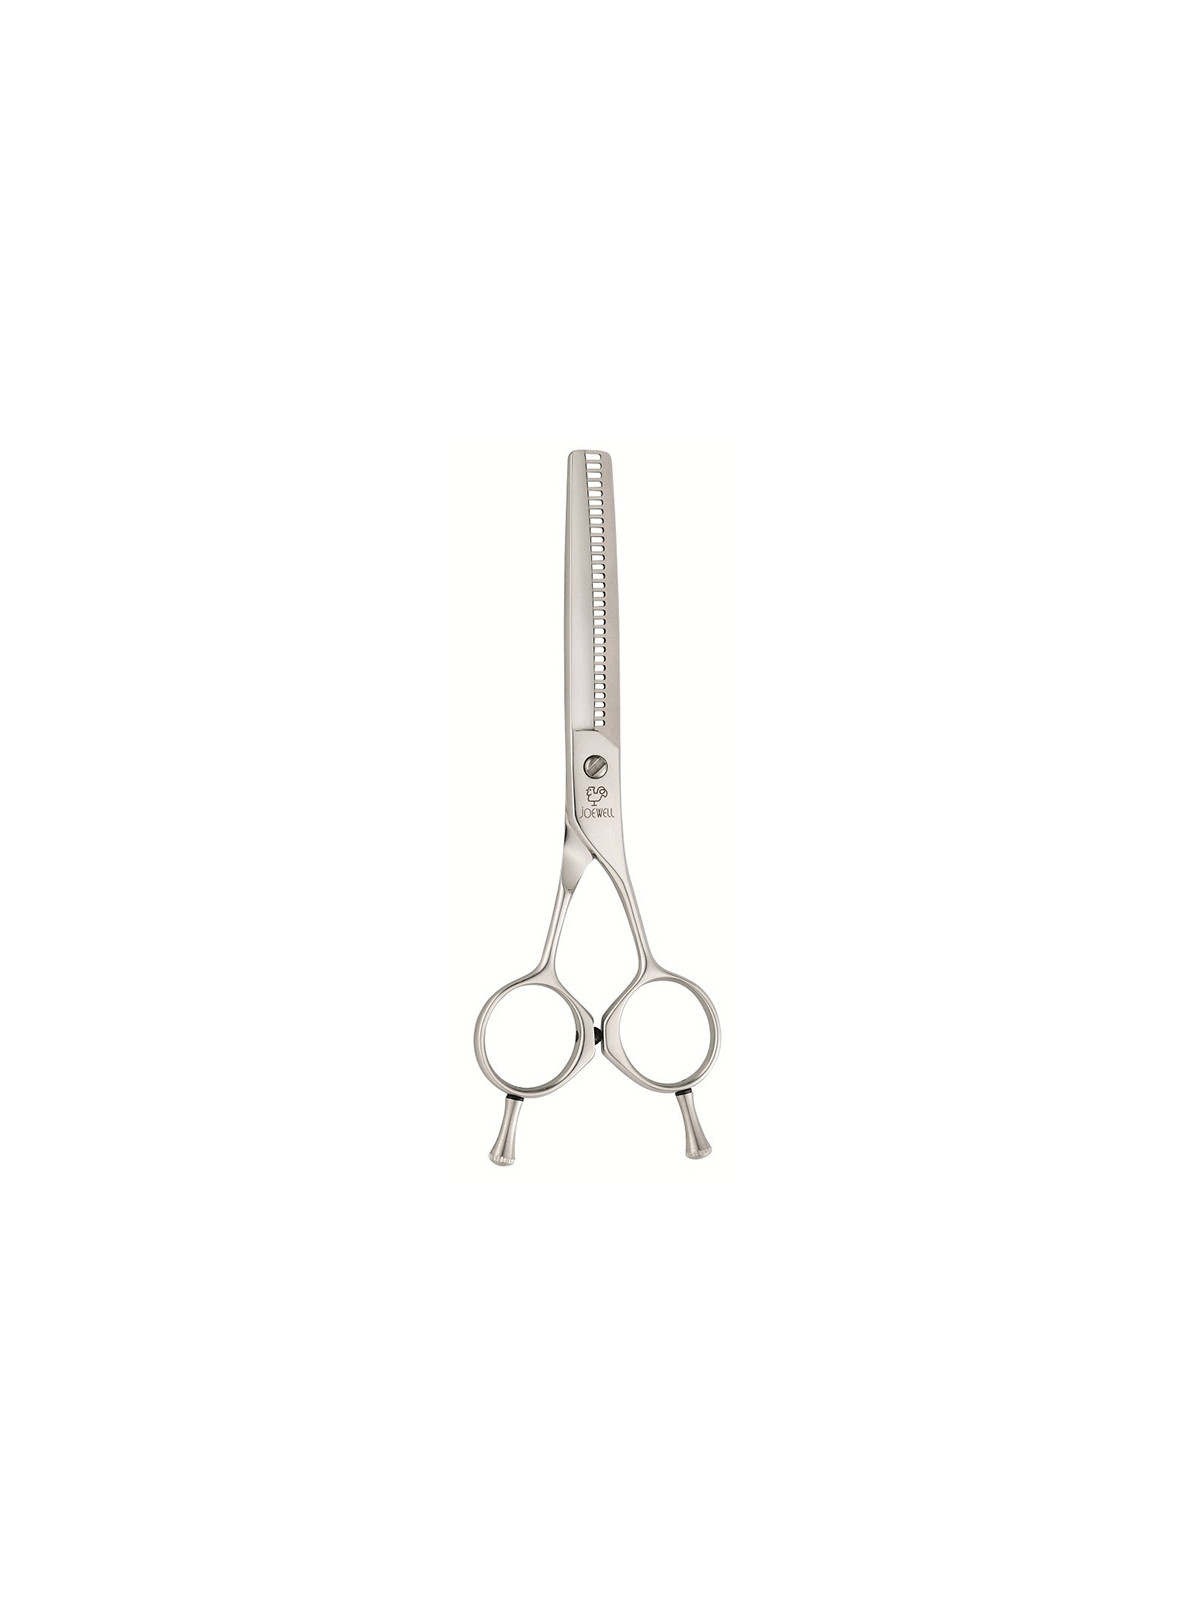 Joewell E30 thinning scissors